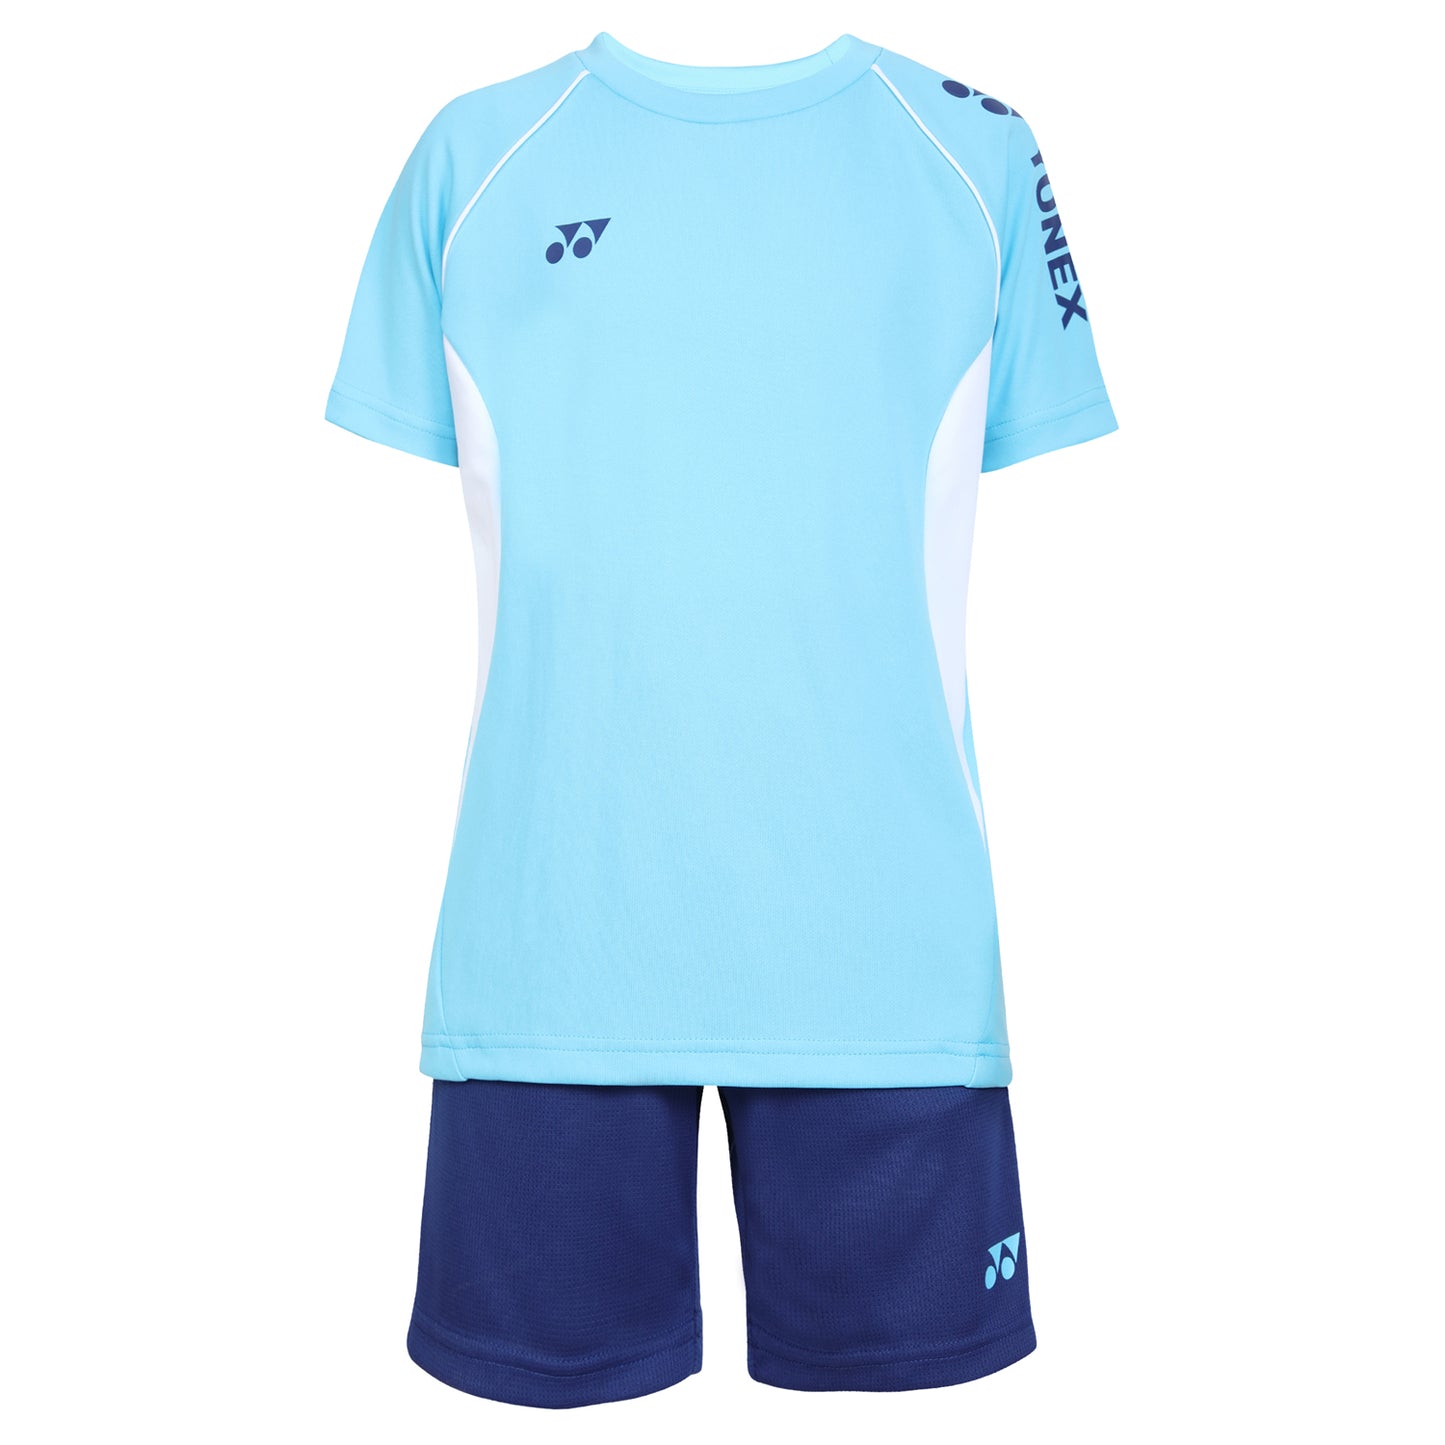 Yonex 1594 Round Neck T-Shirt and Short set for Junior, Blue Atoll - Best Price online Prokicksports.com